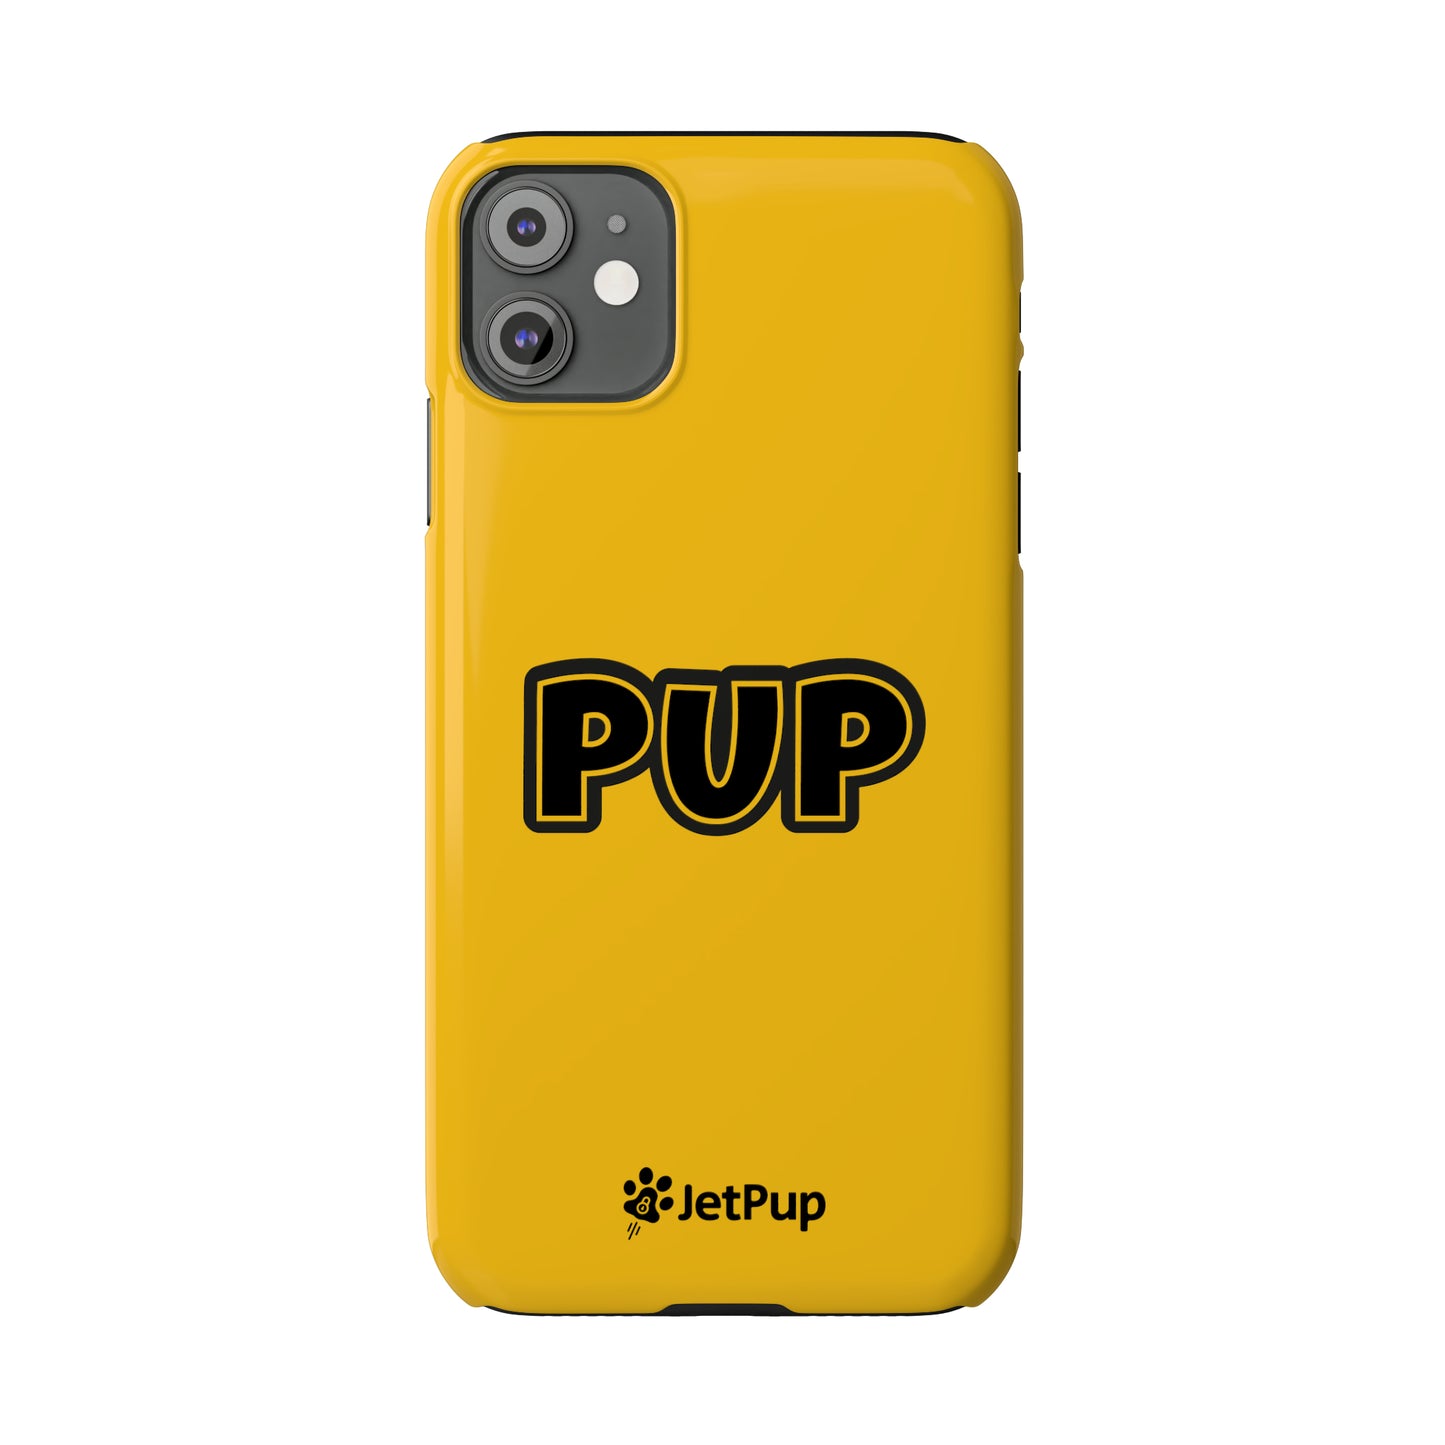 Pup Slim iPhone Cases - Yellow